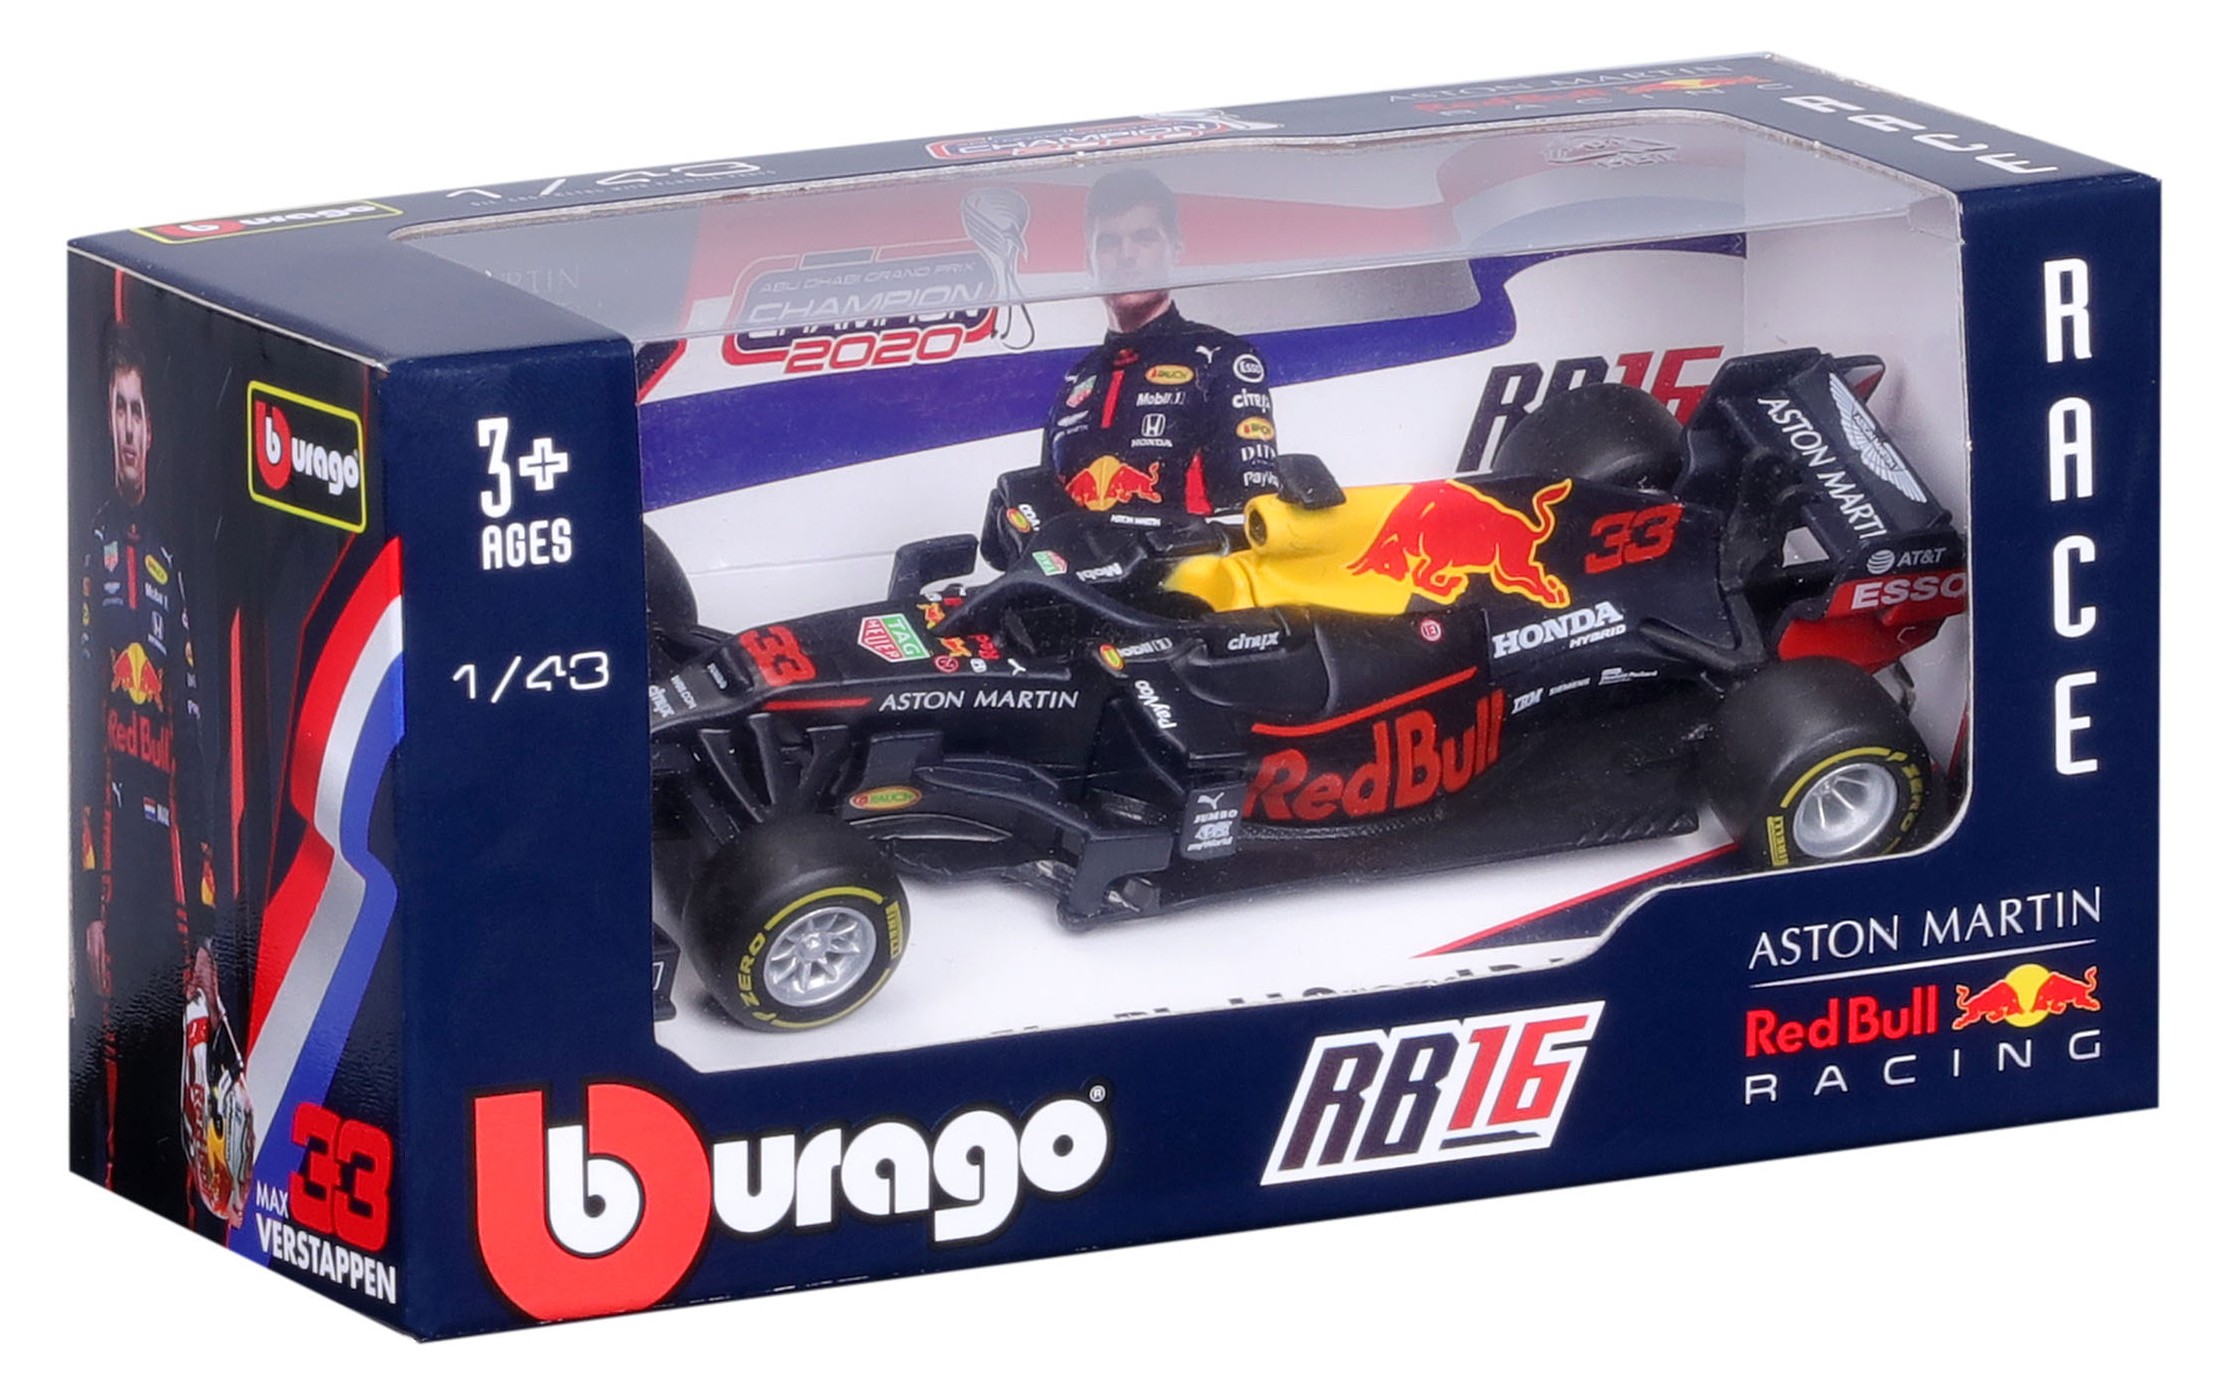 Red Bull Honda Max Verstappen winnaar GP Abu Dhabi modelauto 1:43 | Bburago Nederland